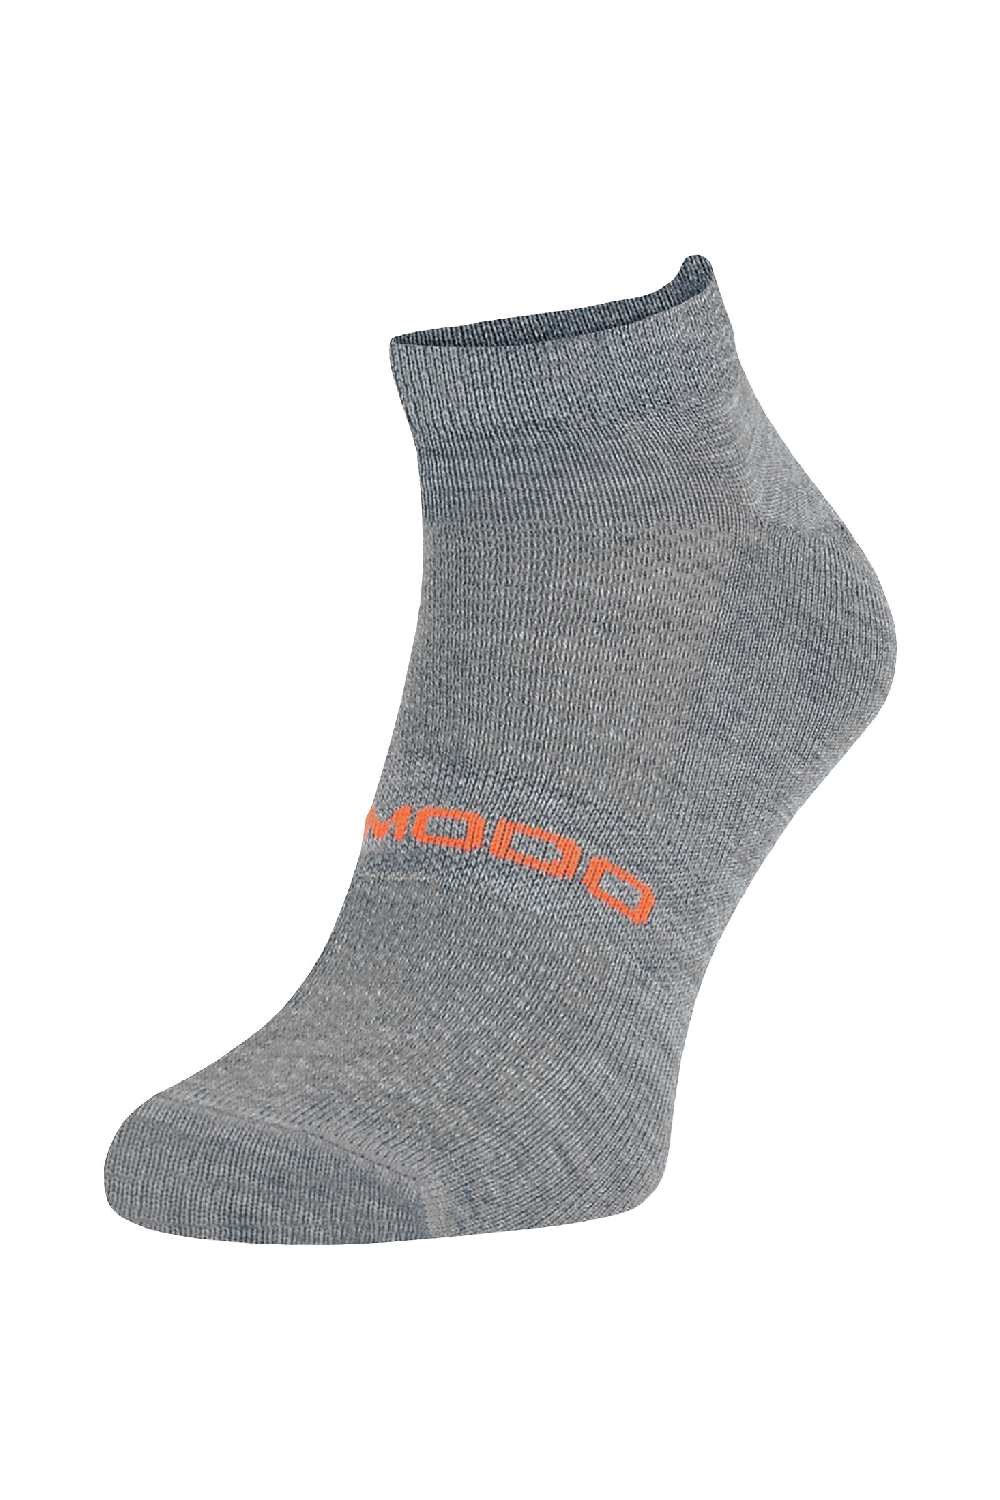 Unisex Merino Wool Low Cut Running Socks -